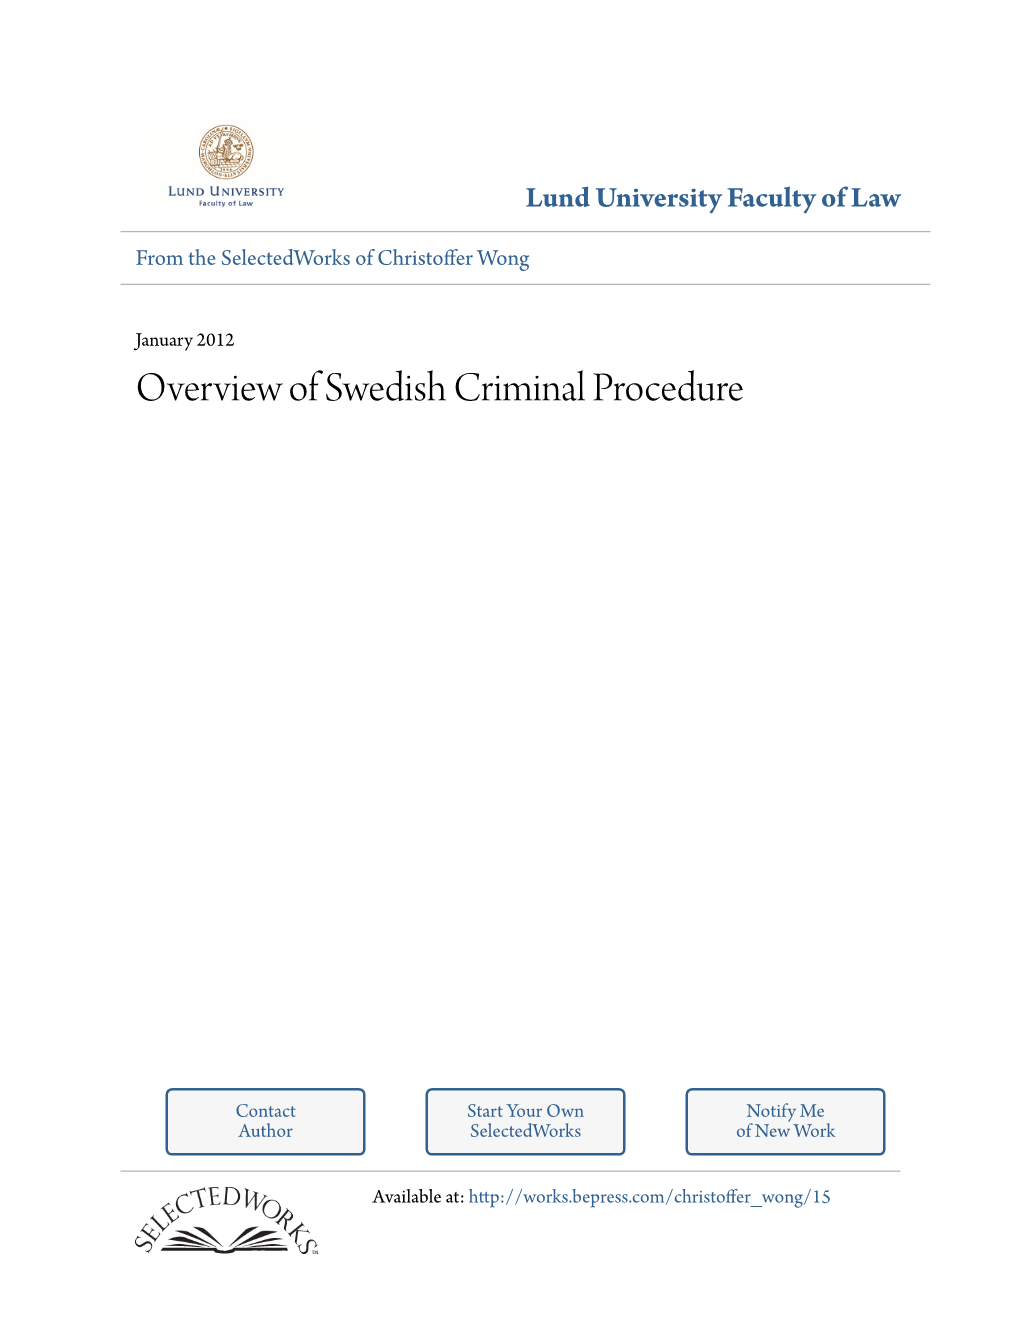 Overview of Swedish Criminal Procedure